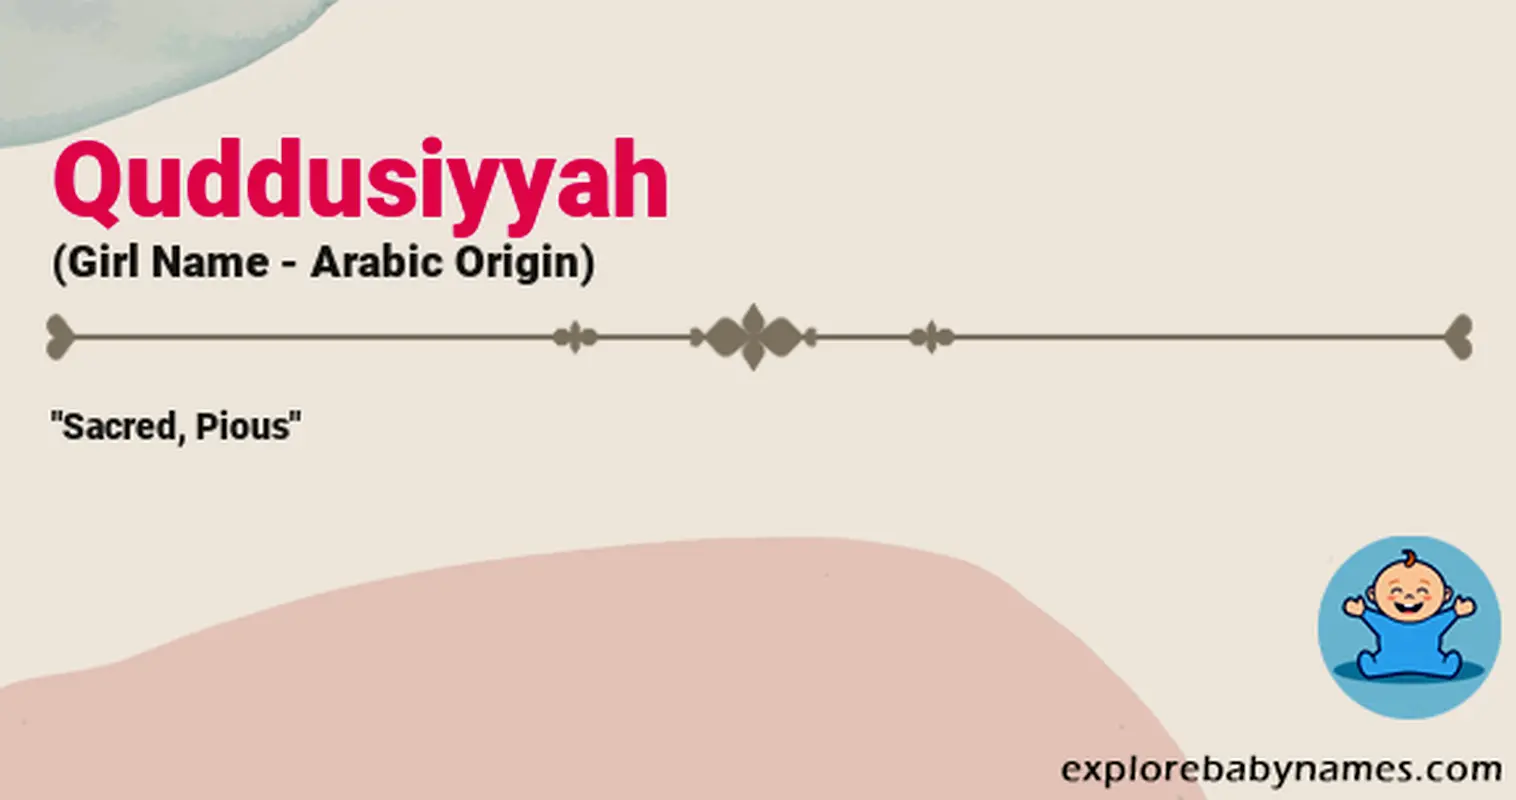 Meaning of Quddusiyyah